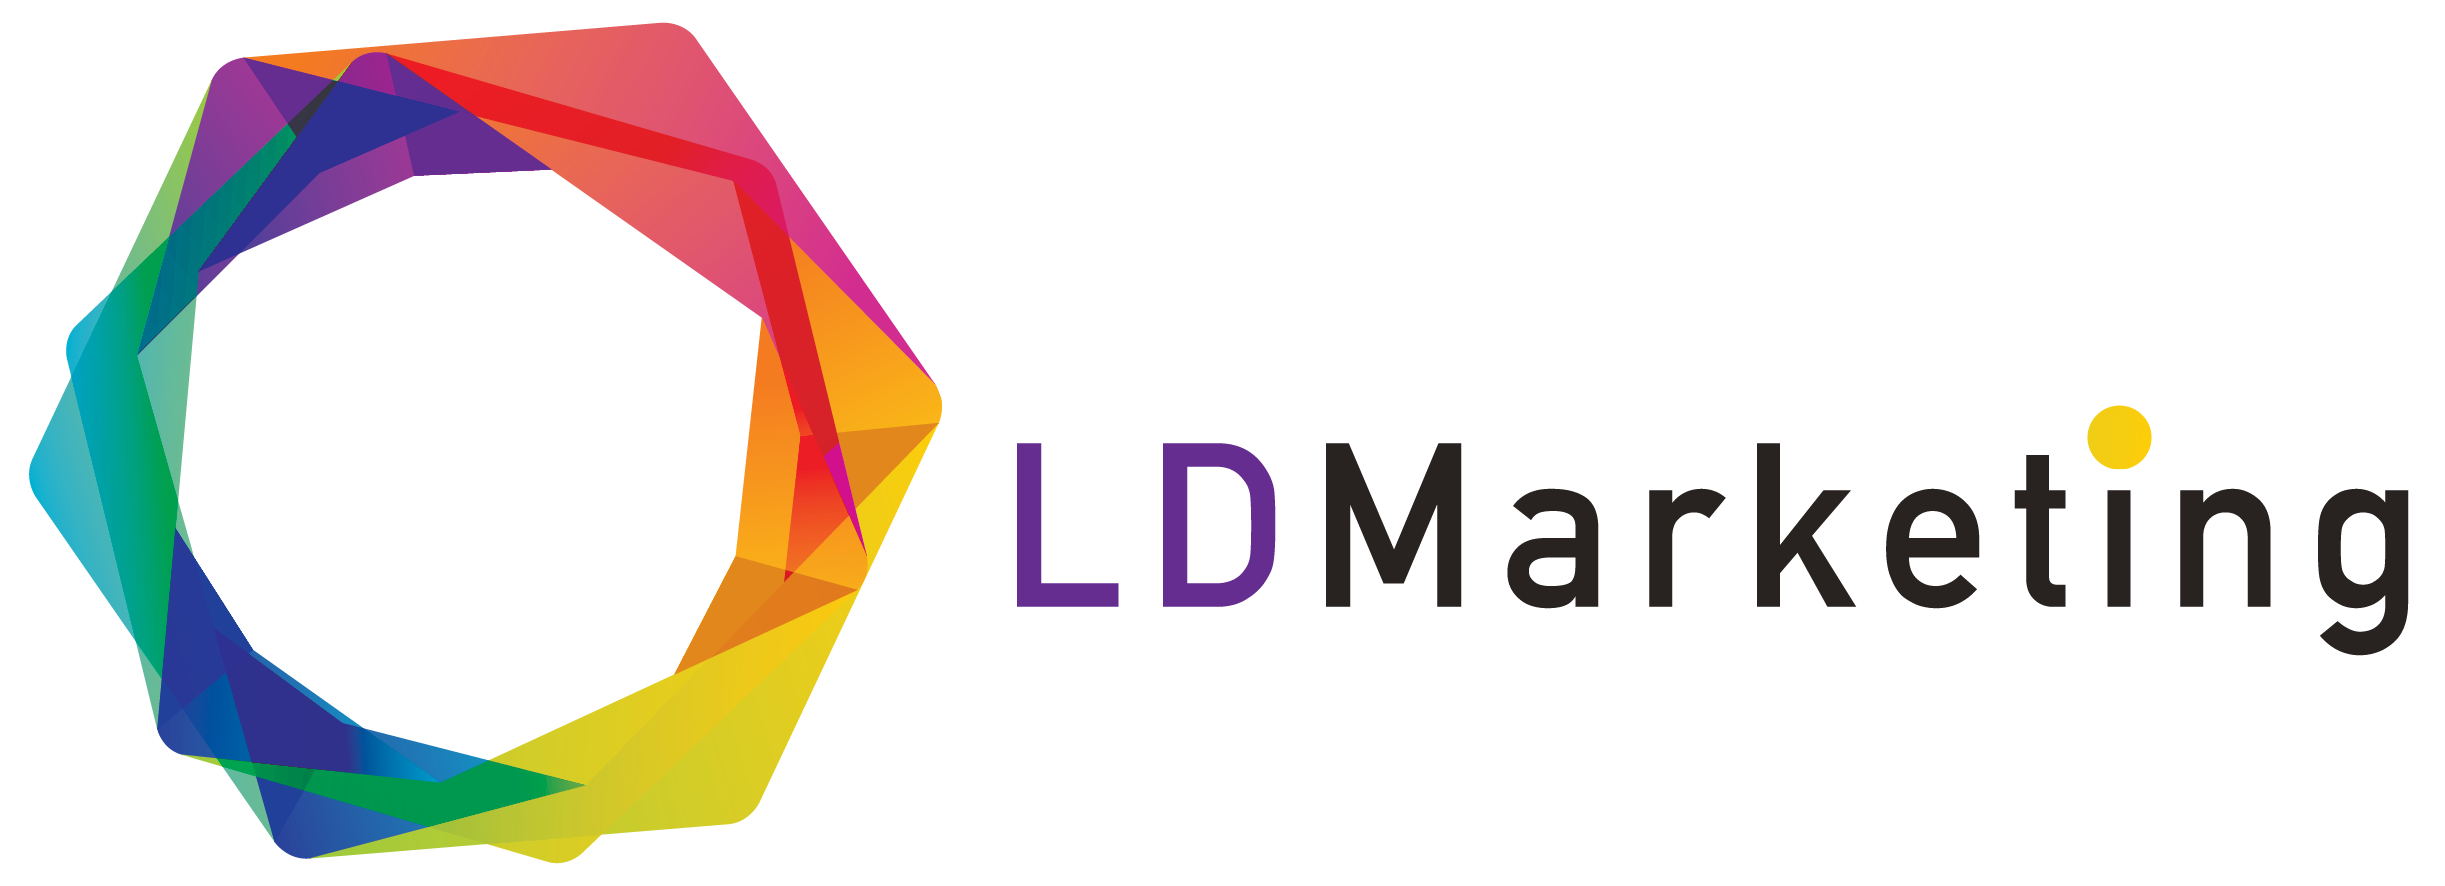 LD Marketing and Communications